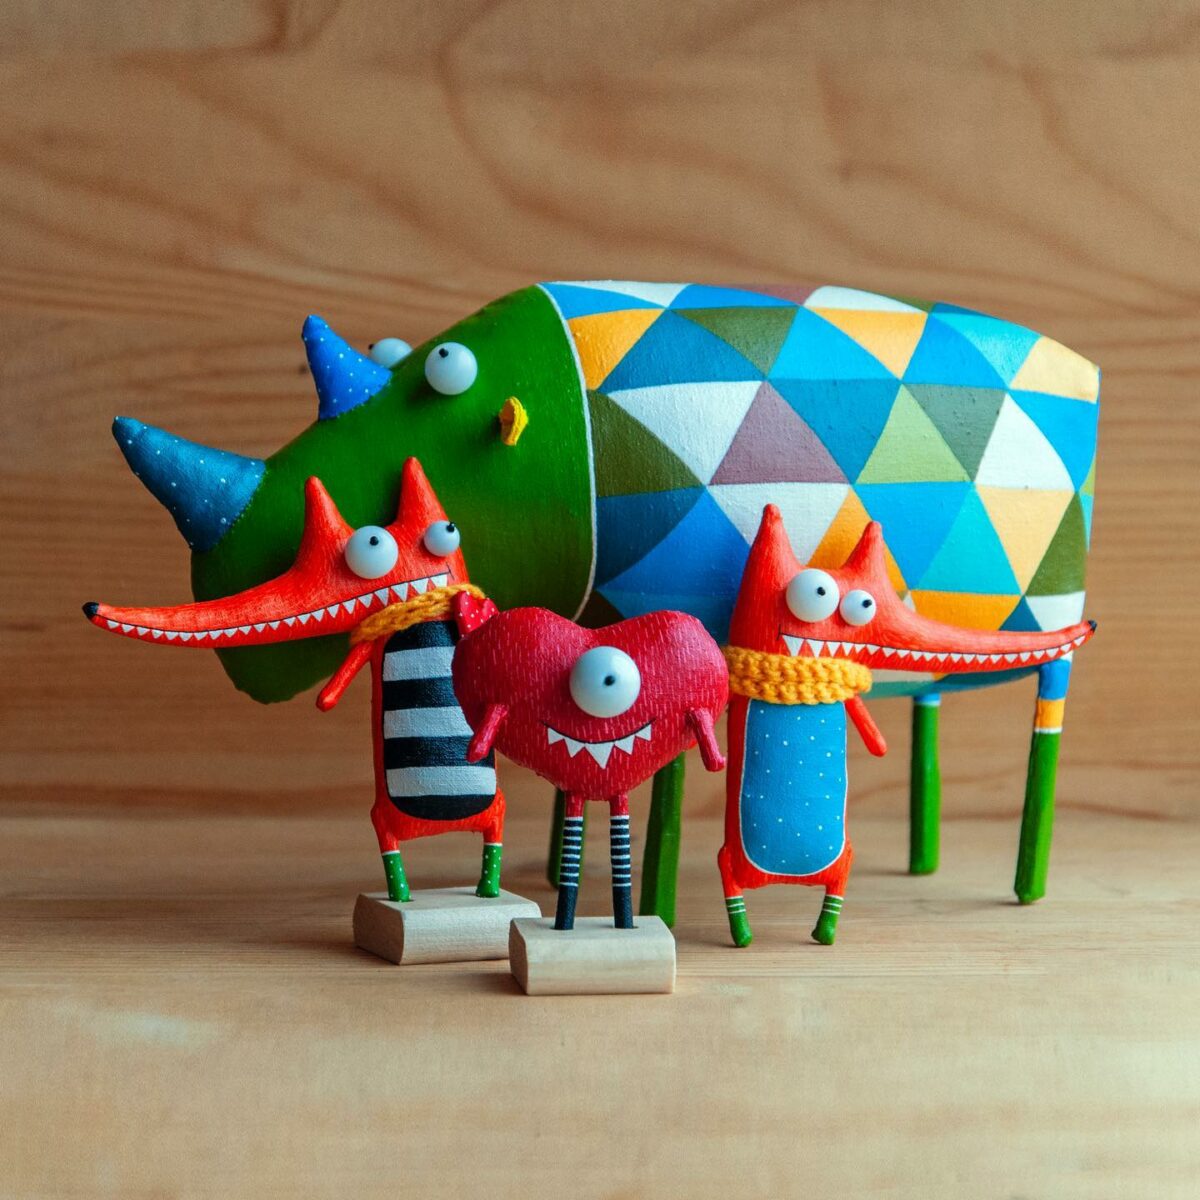 Colorful Handmade Toys Of Quirky Creatures By Lidiya Marinchuk (1)